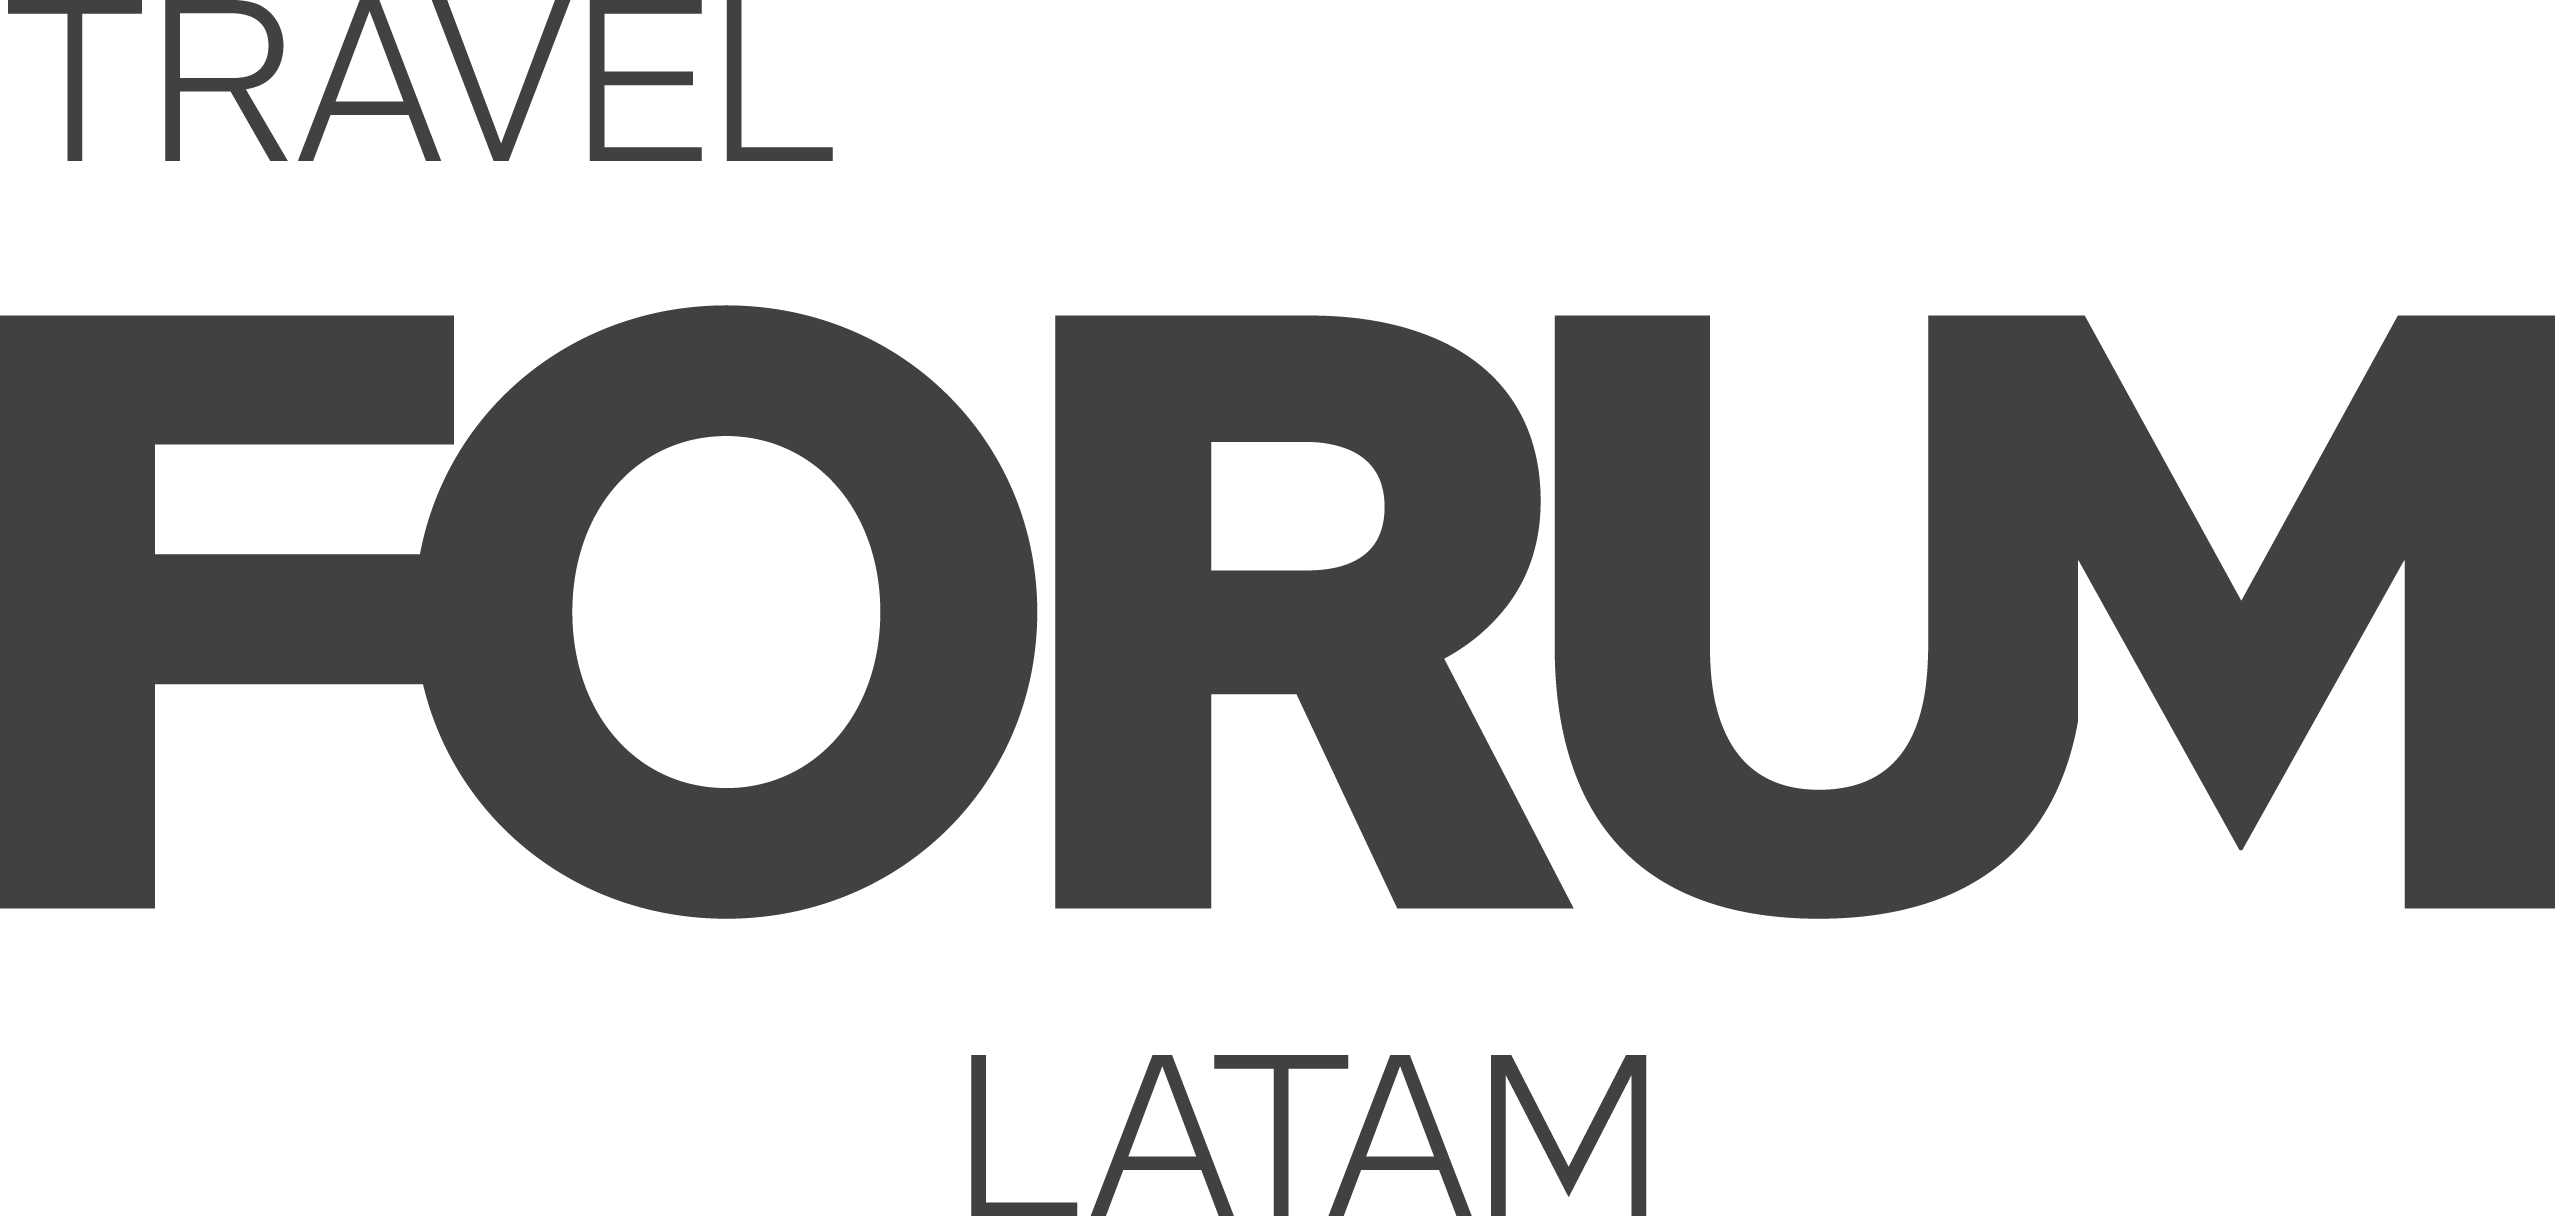 Paneles Travel Forum Latam logo